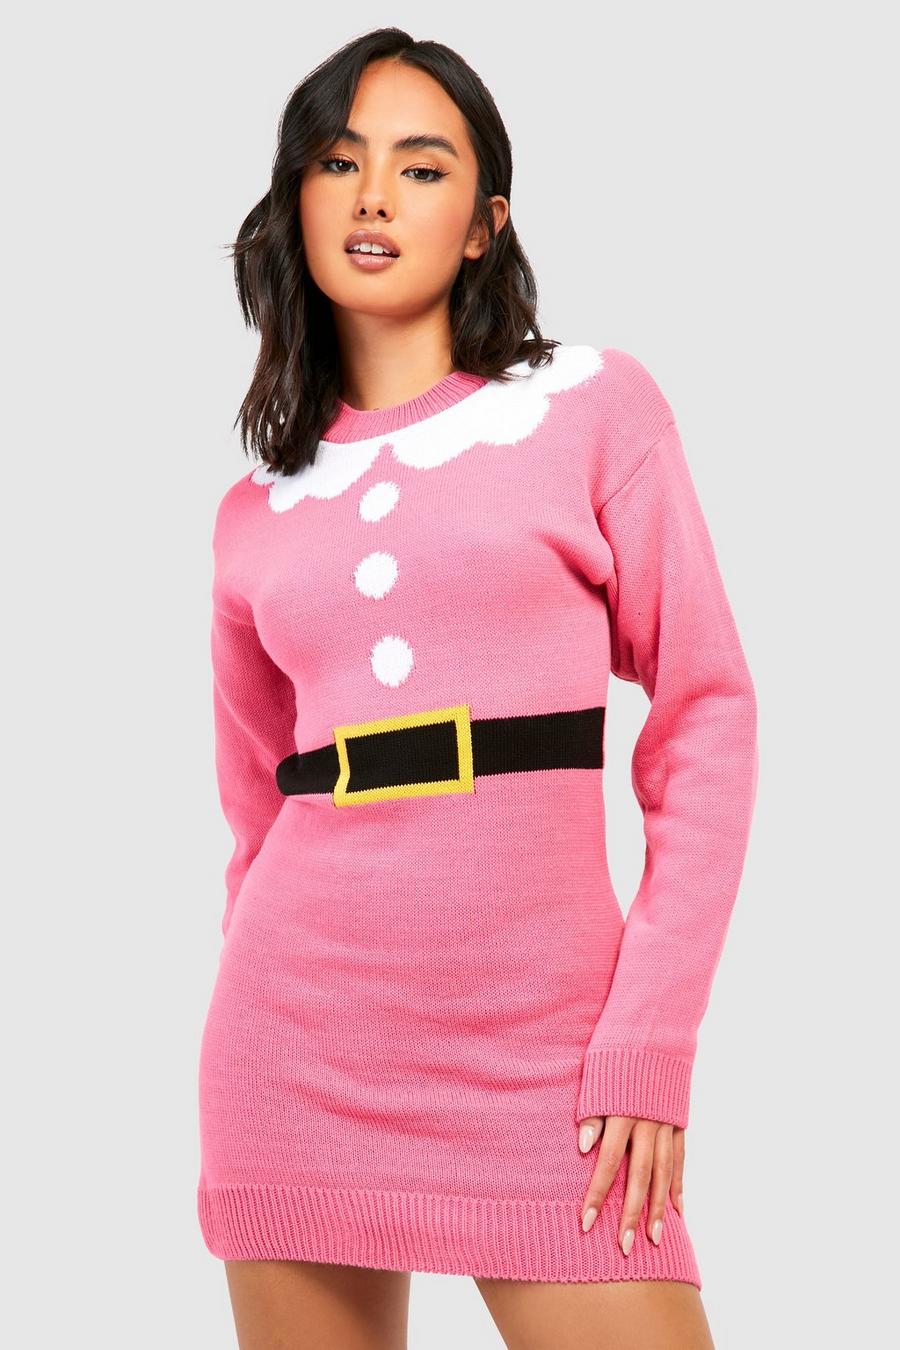 Hot pink Mrs Claus Christmas Sweater Dress